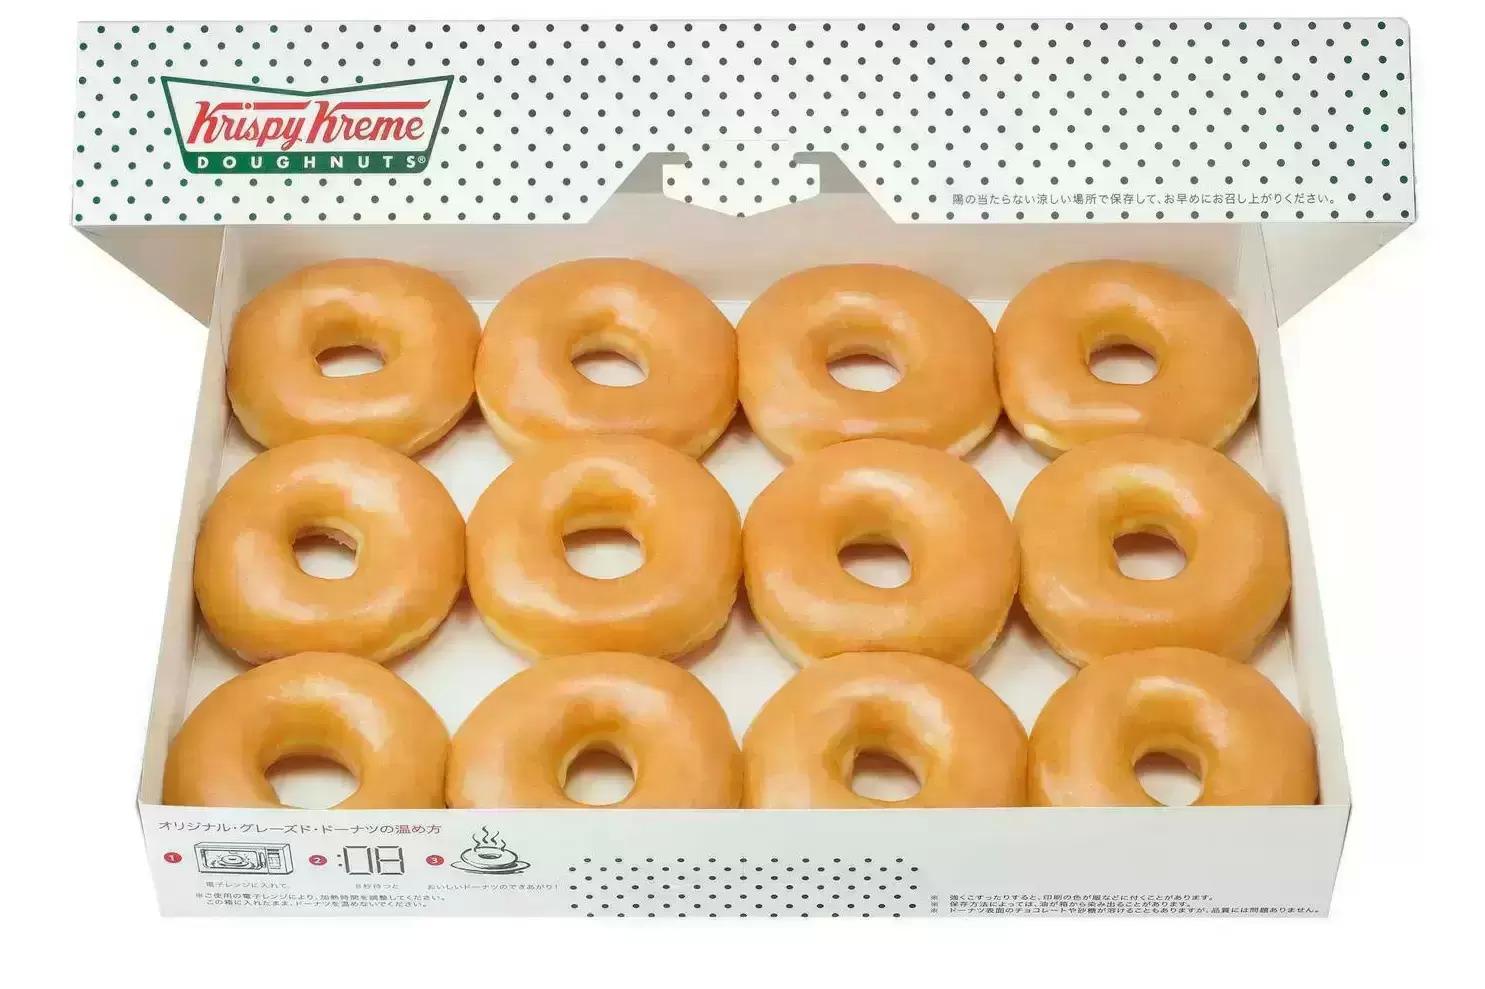 Free Krispy Kreme Dozen Doughnuts for the First 500 People on November 13th